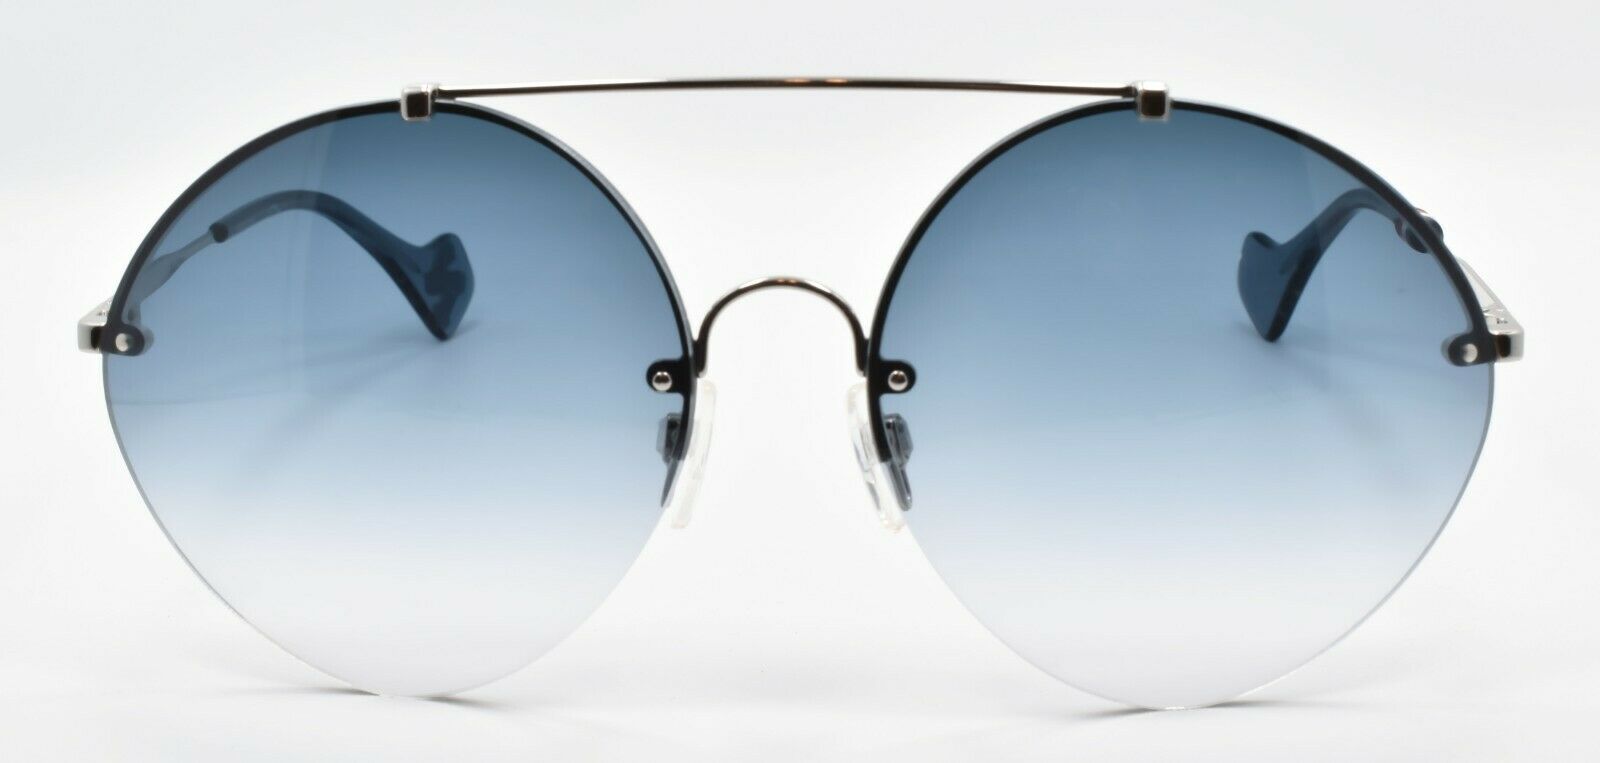 2-TOMMY HILFIGER TH Zendaya II 01008 Women's Sunglasses Palladium / Blue Gradient-716736155722-IKSpecs